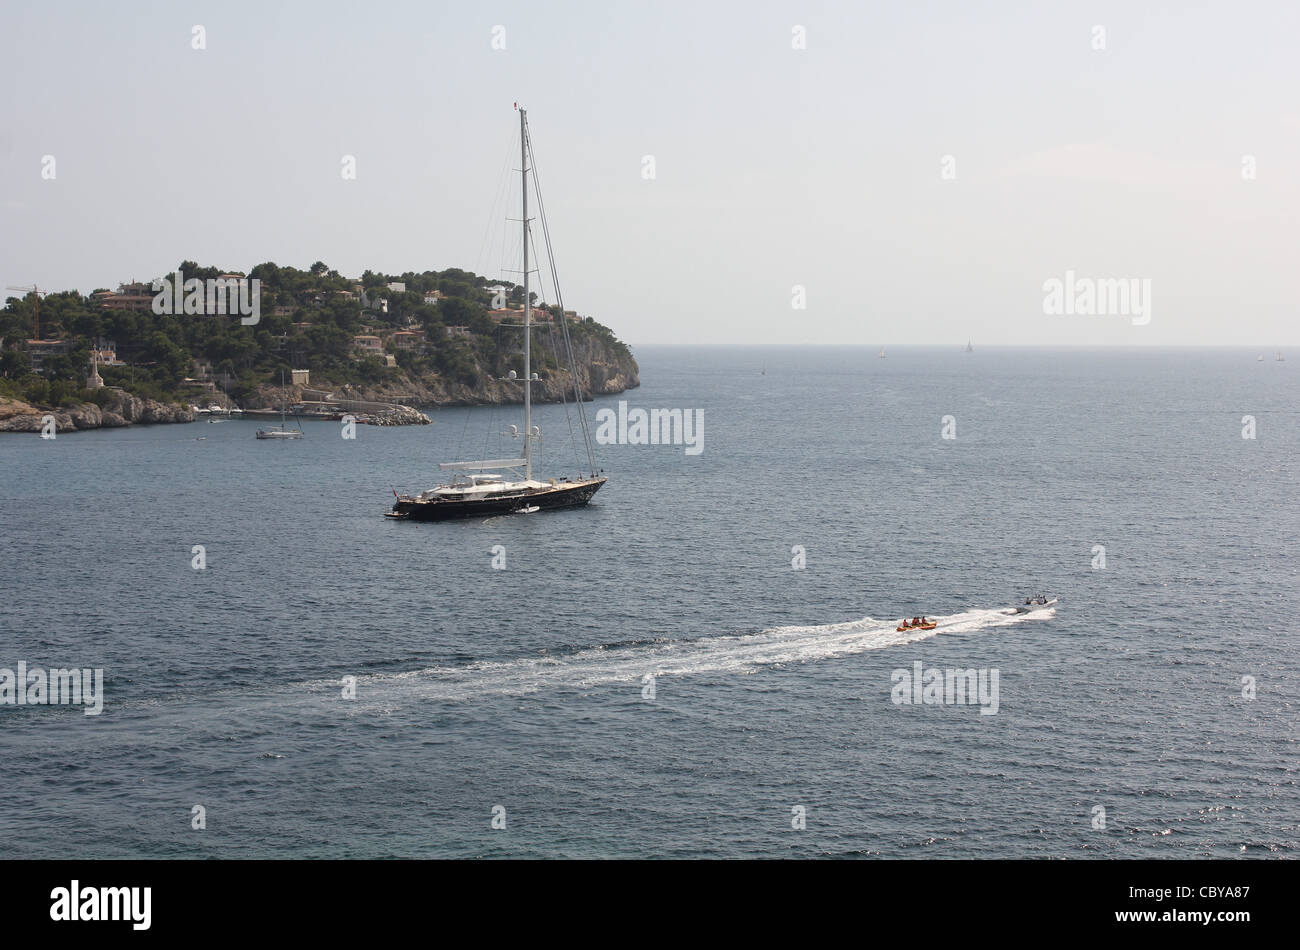 Scene in Santa Ponsa Bay with large modern sailing yacht at anchor, Calvia, South West Mallorca / Majorca, Balearic Islands Stock Photo